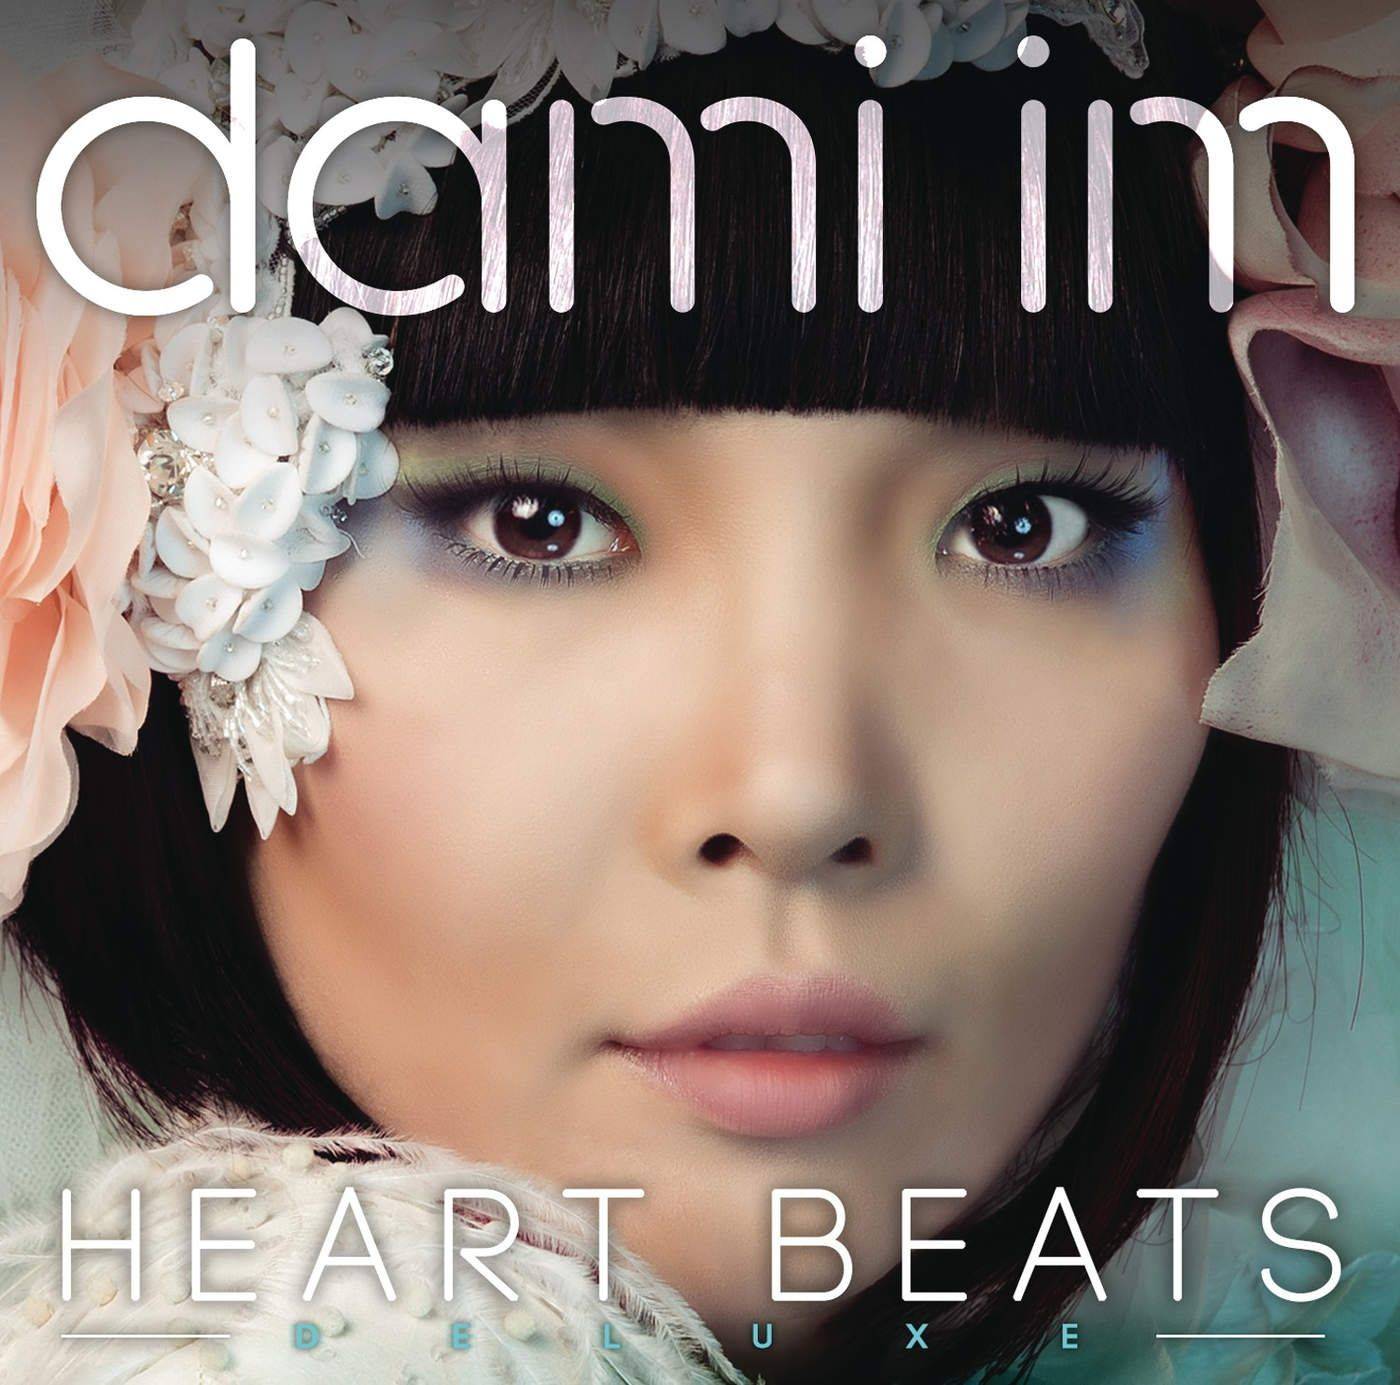 Heart Beats (Deluxe Edition)